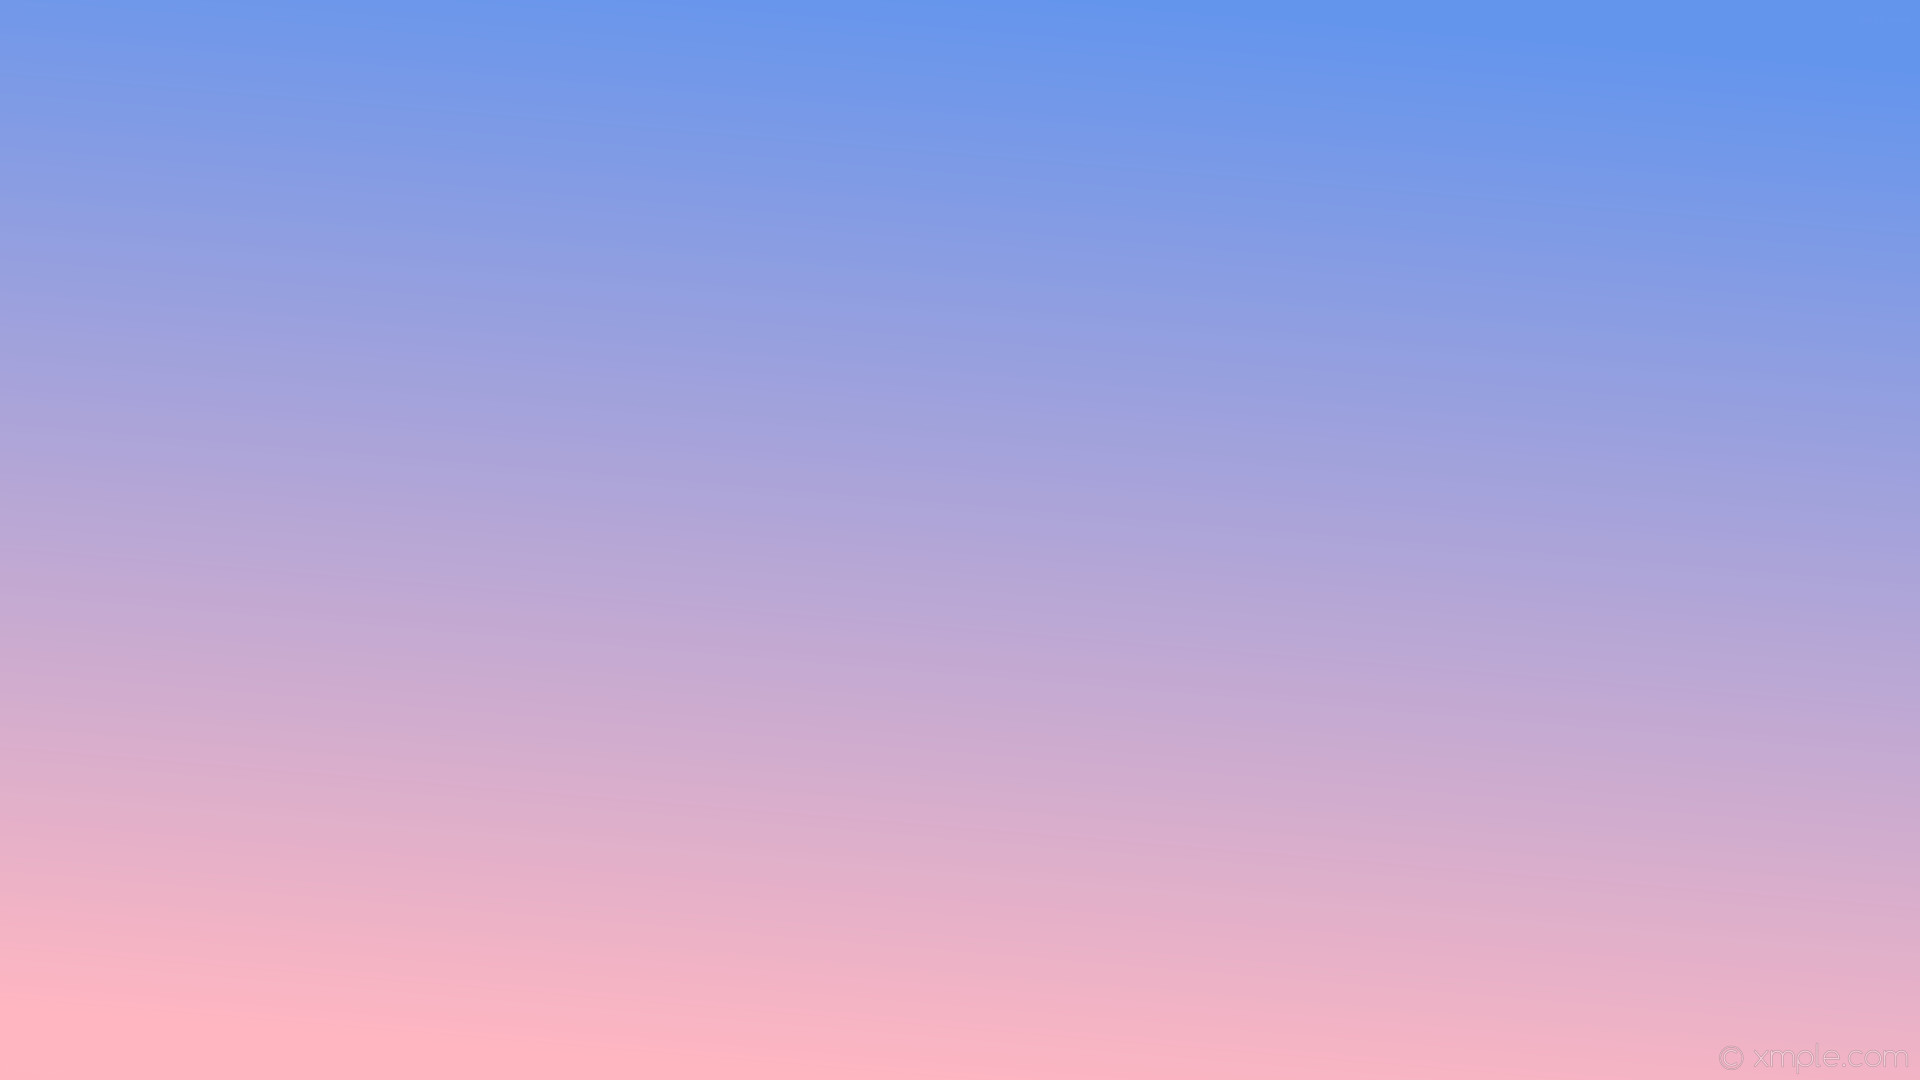 wallpaper blue pink gradient linear light pink cornflower blue #ffb6c1  #6495ed 255Â°